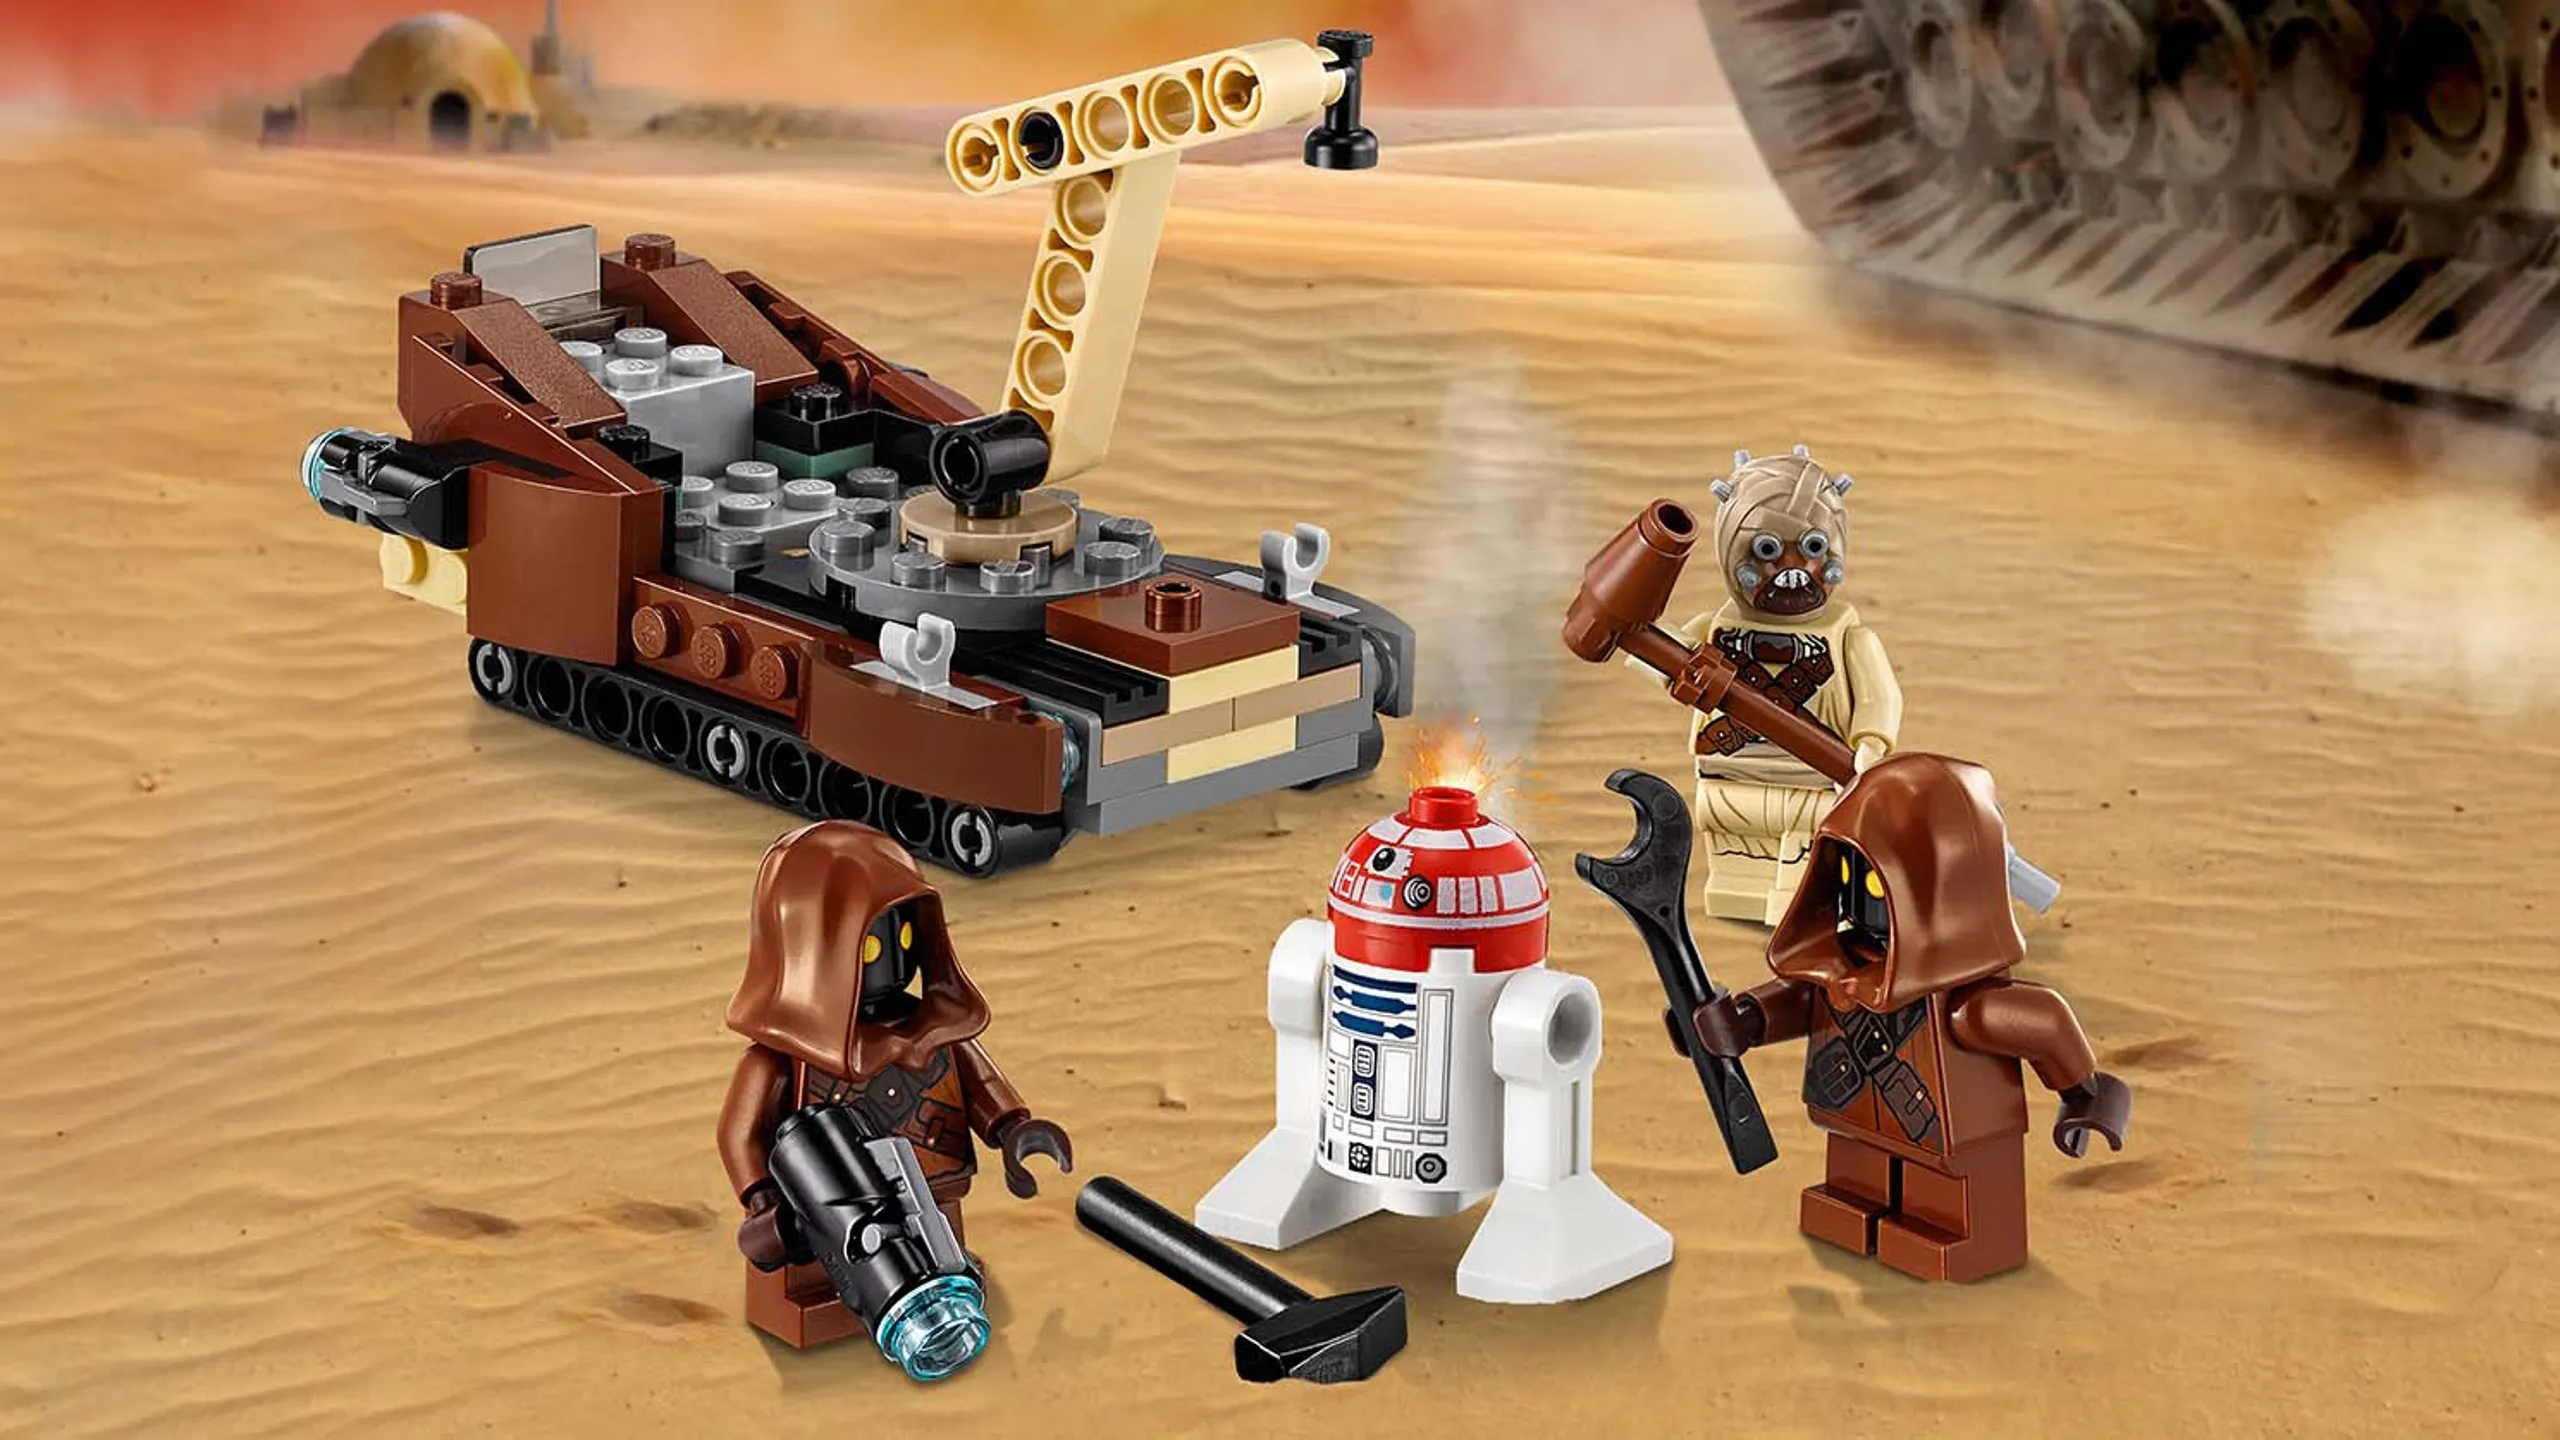 75198 - LEGO Star Wars - Tatooine™ Battle Pack - Droids, Space Vehicle, Tusken Raider, Battle